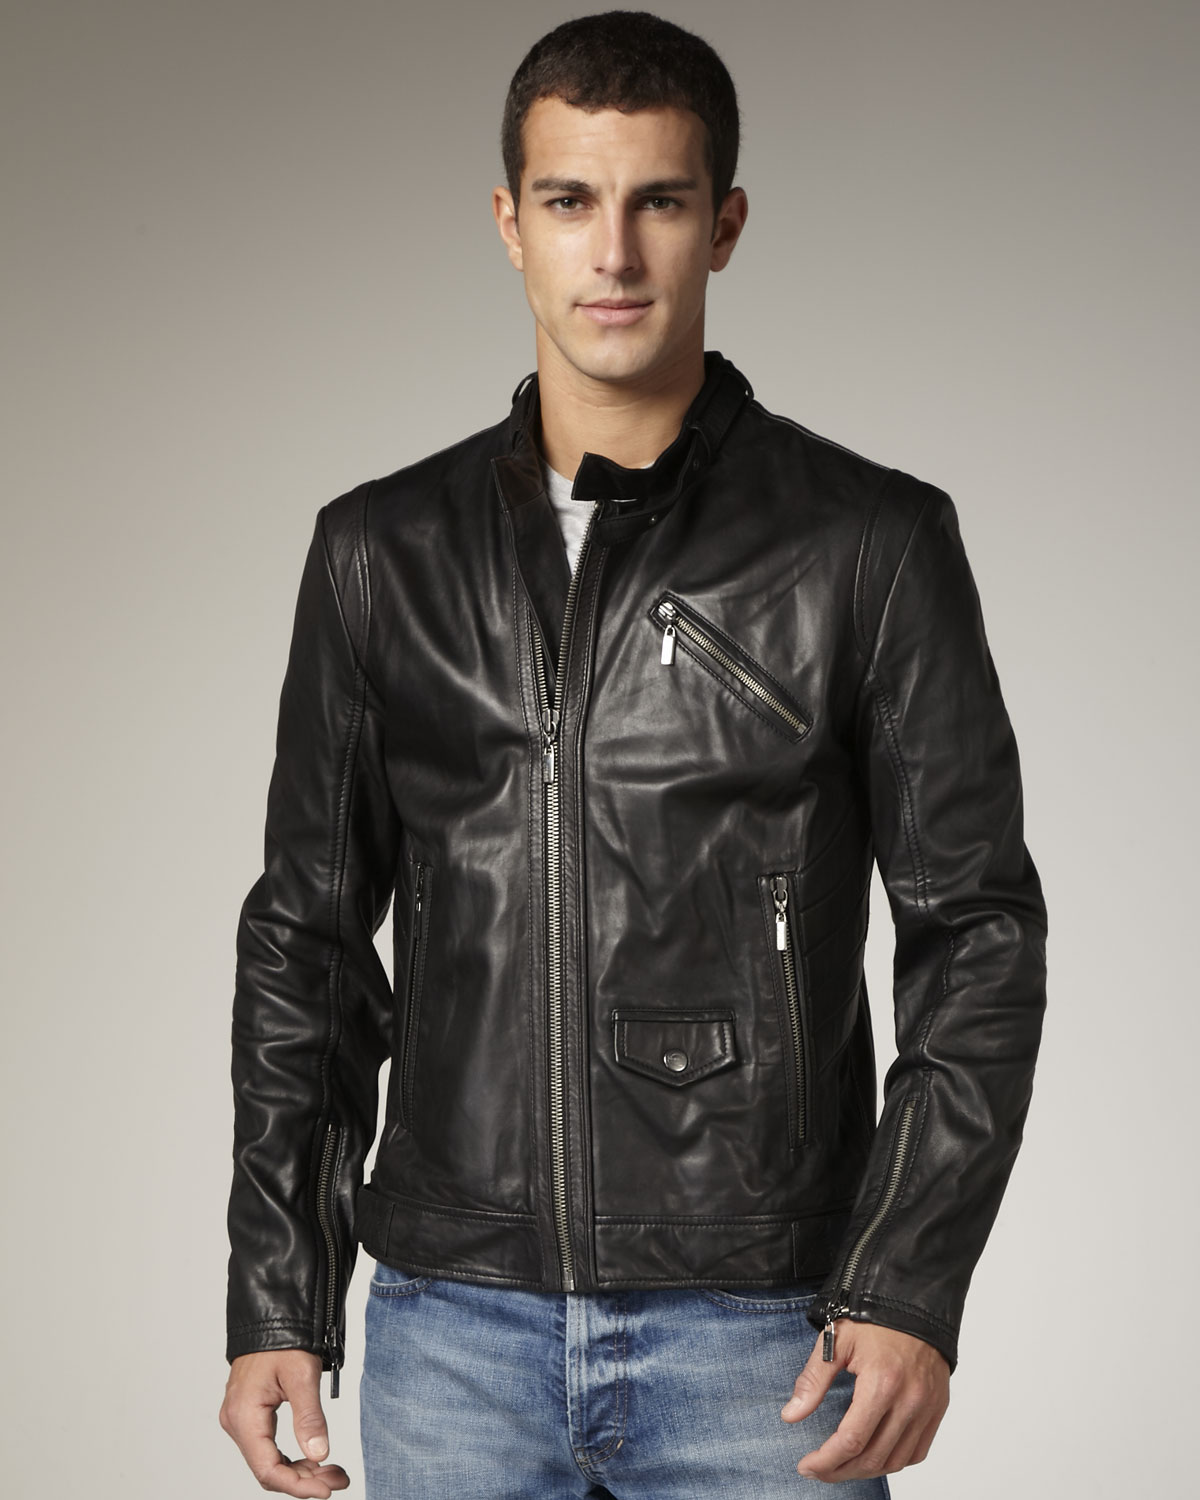 Lyst - Just Cavalli Leather Biker Jacket in Black for Men